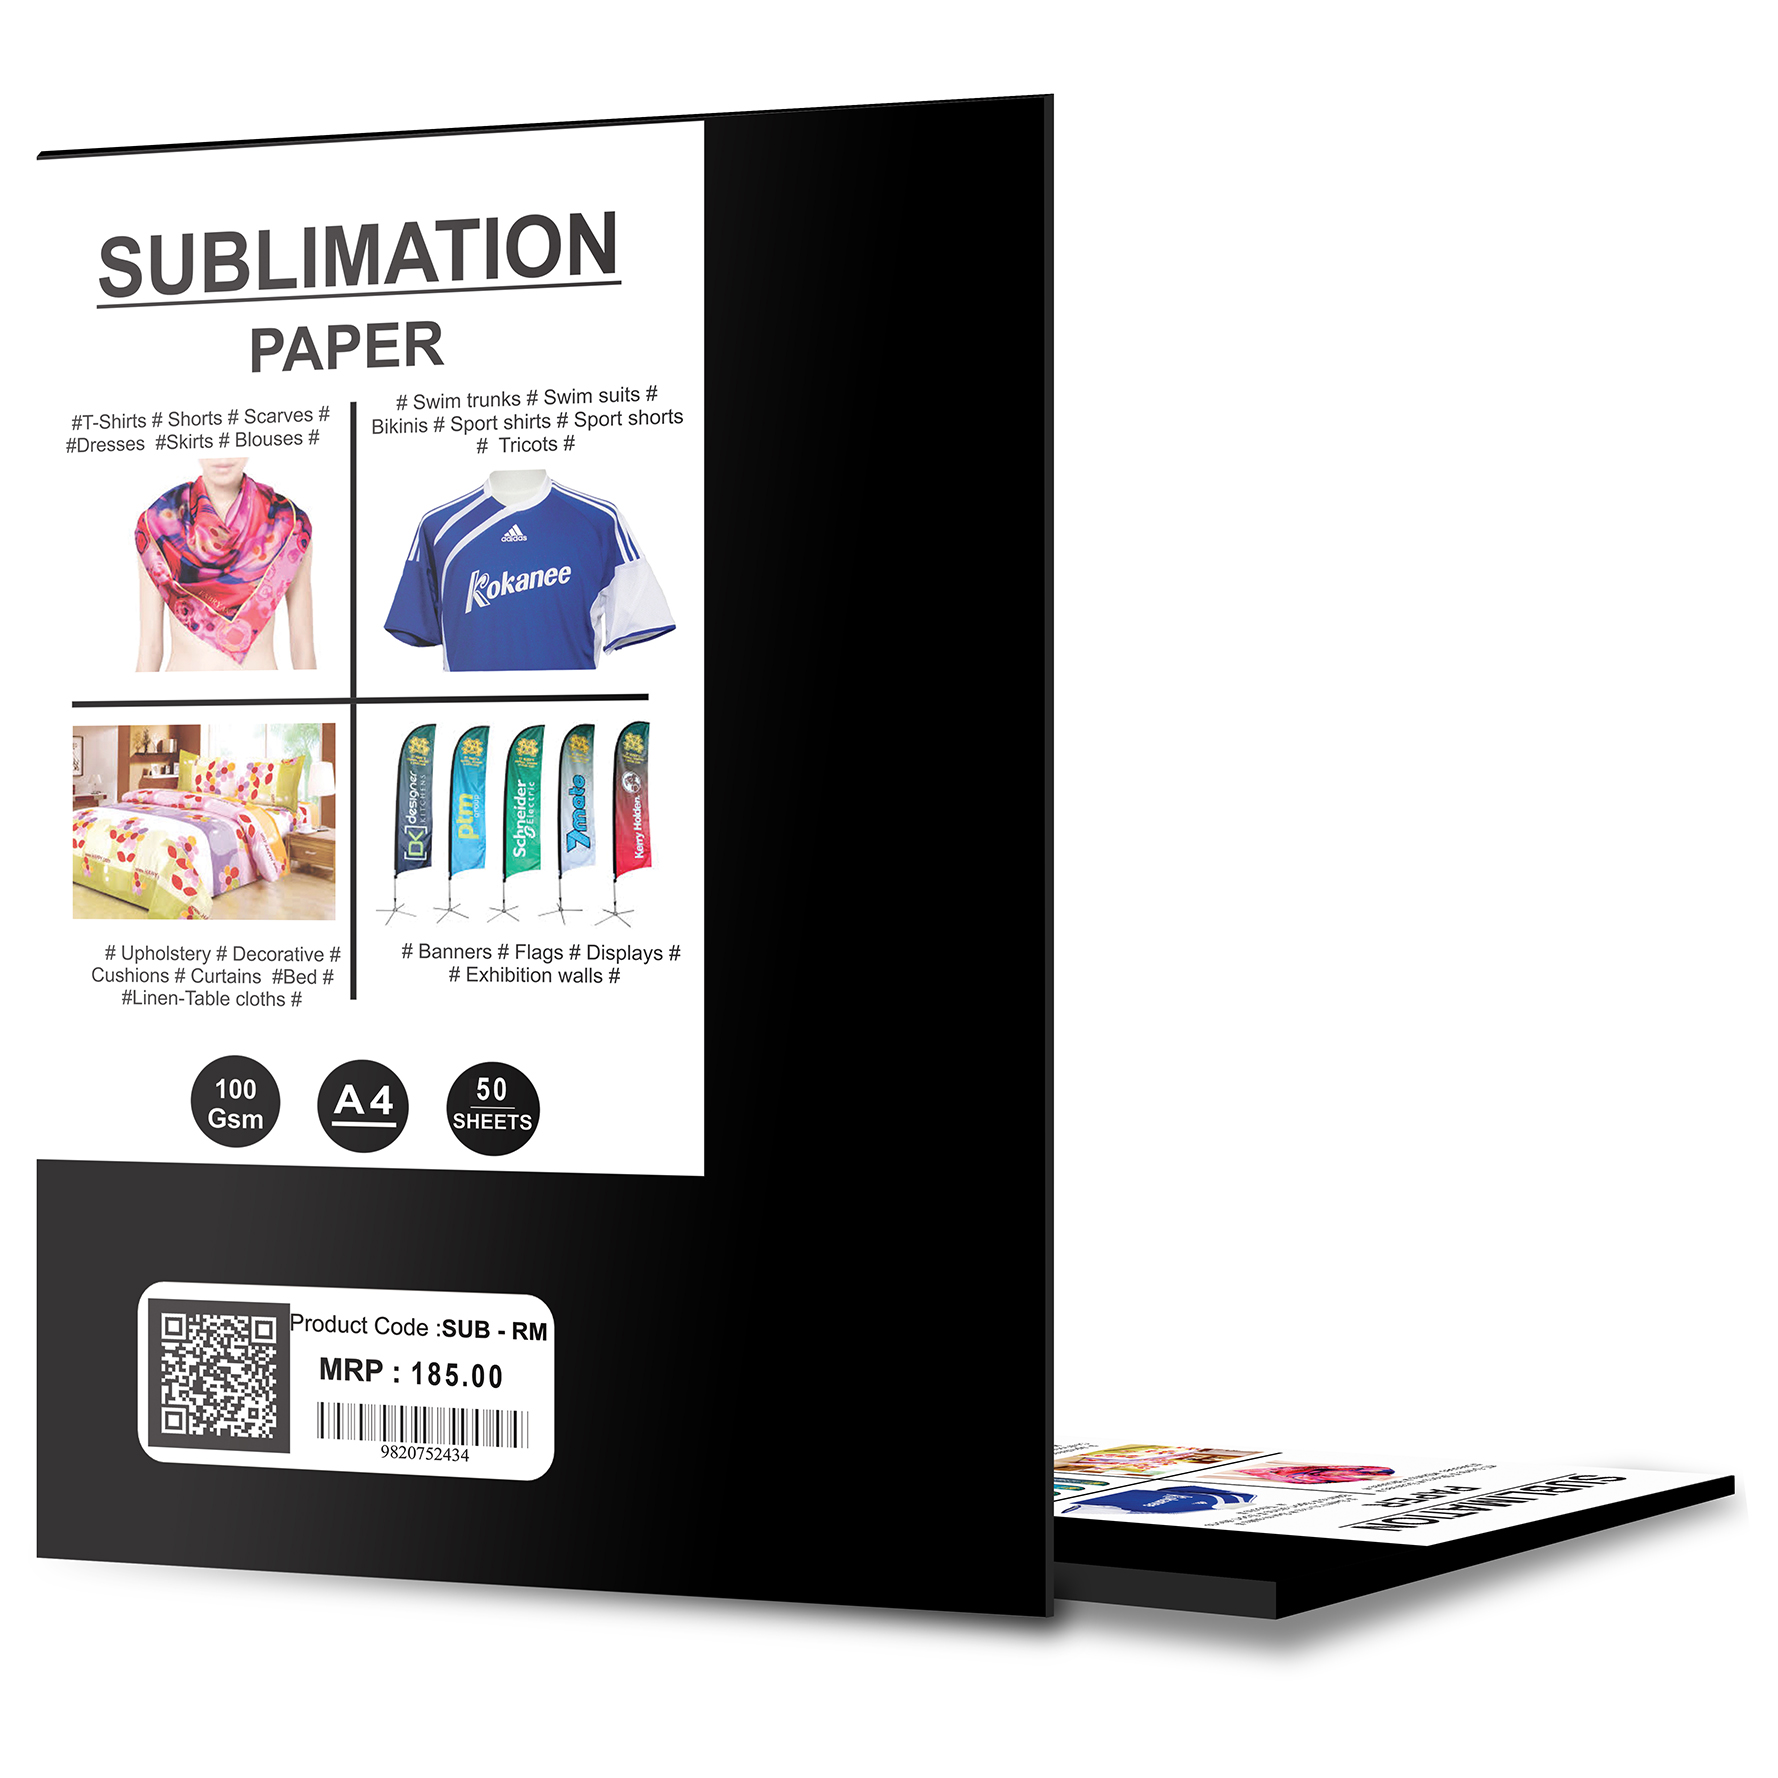 Sublimation Transfer Paper 100gsm A4